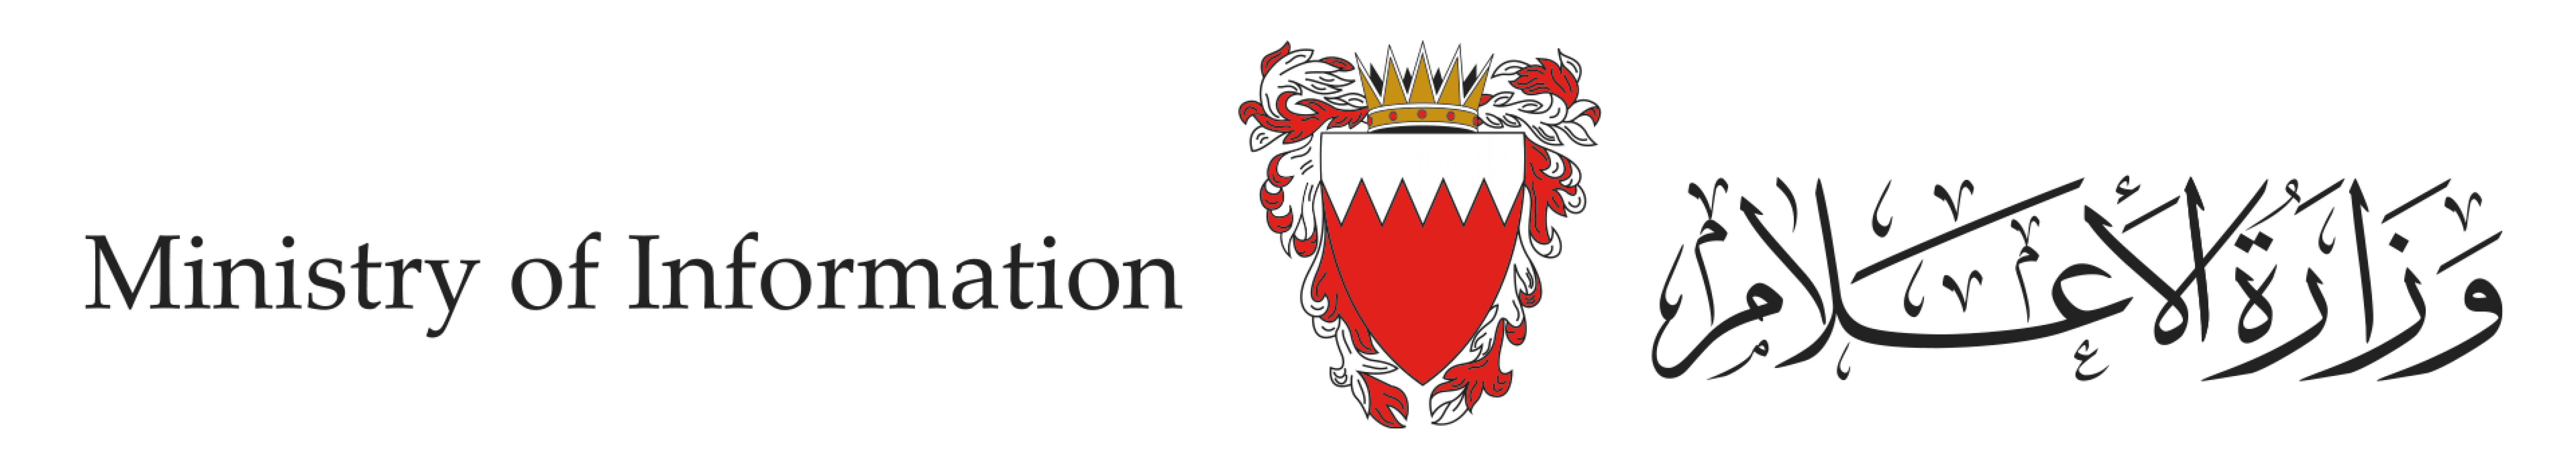 Ministry of Information |  وزارة الاعلام | Kingdom of Bahrain